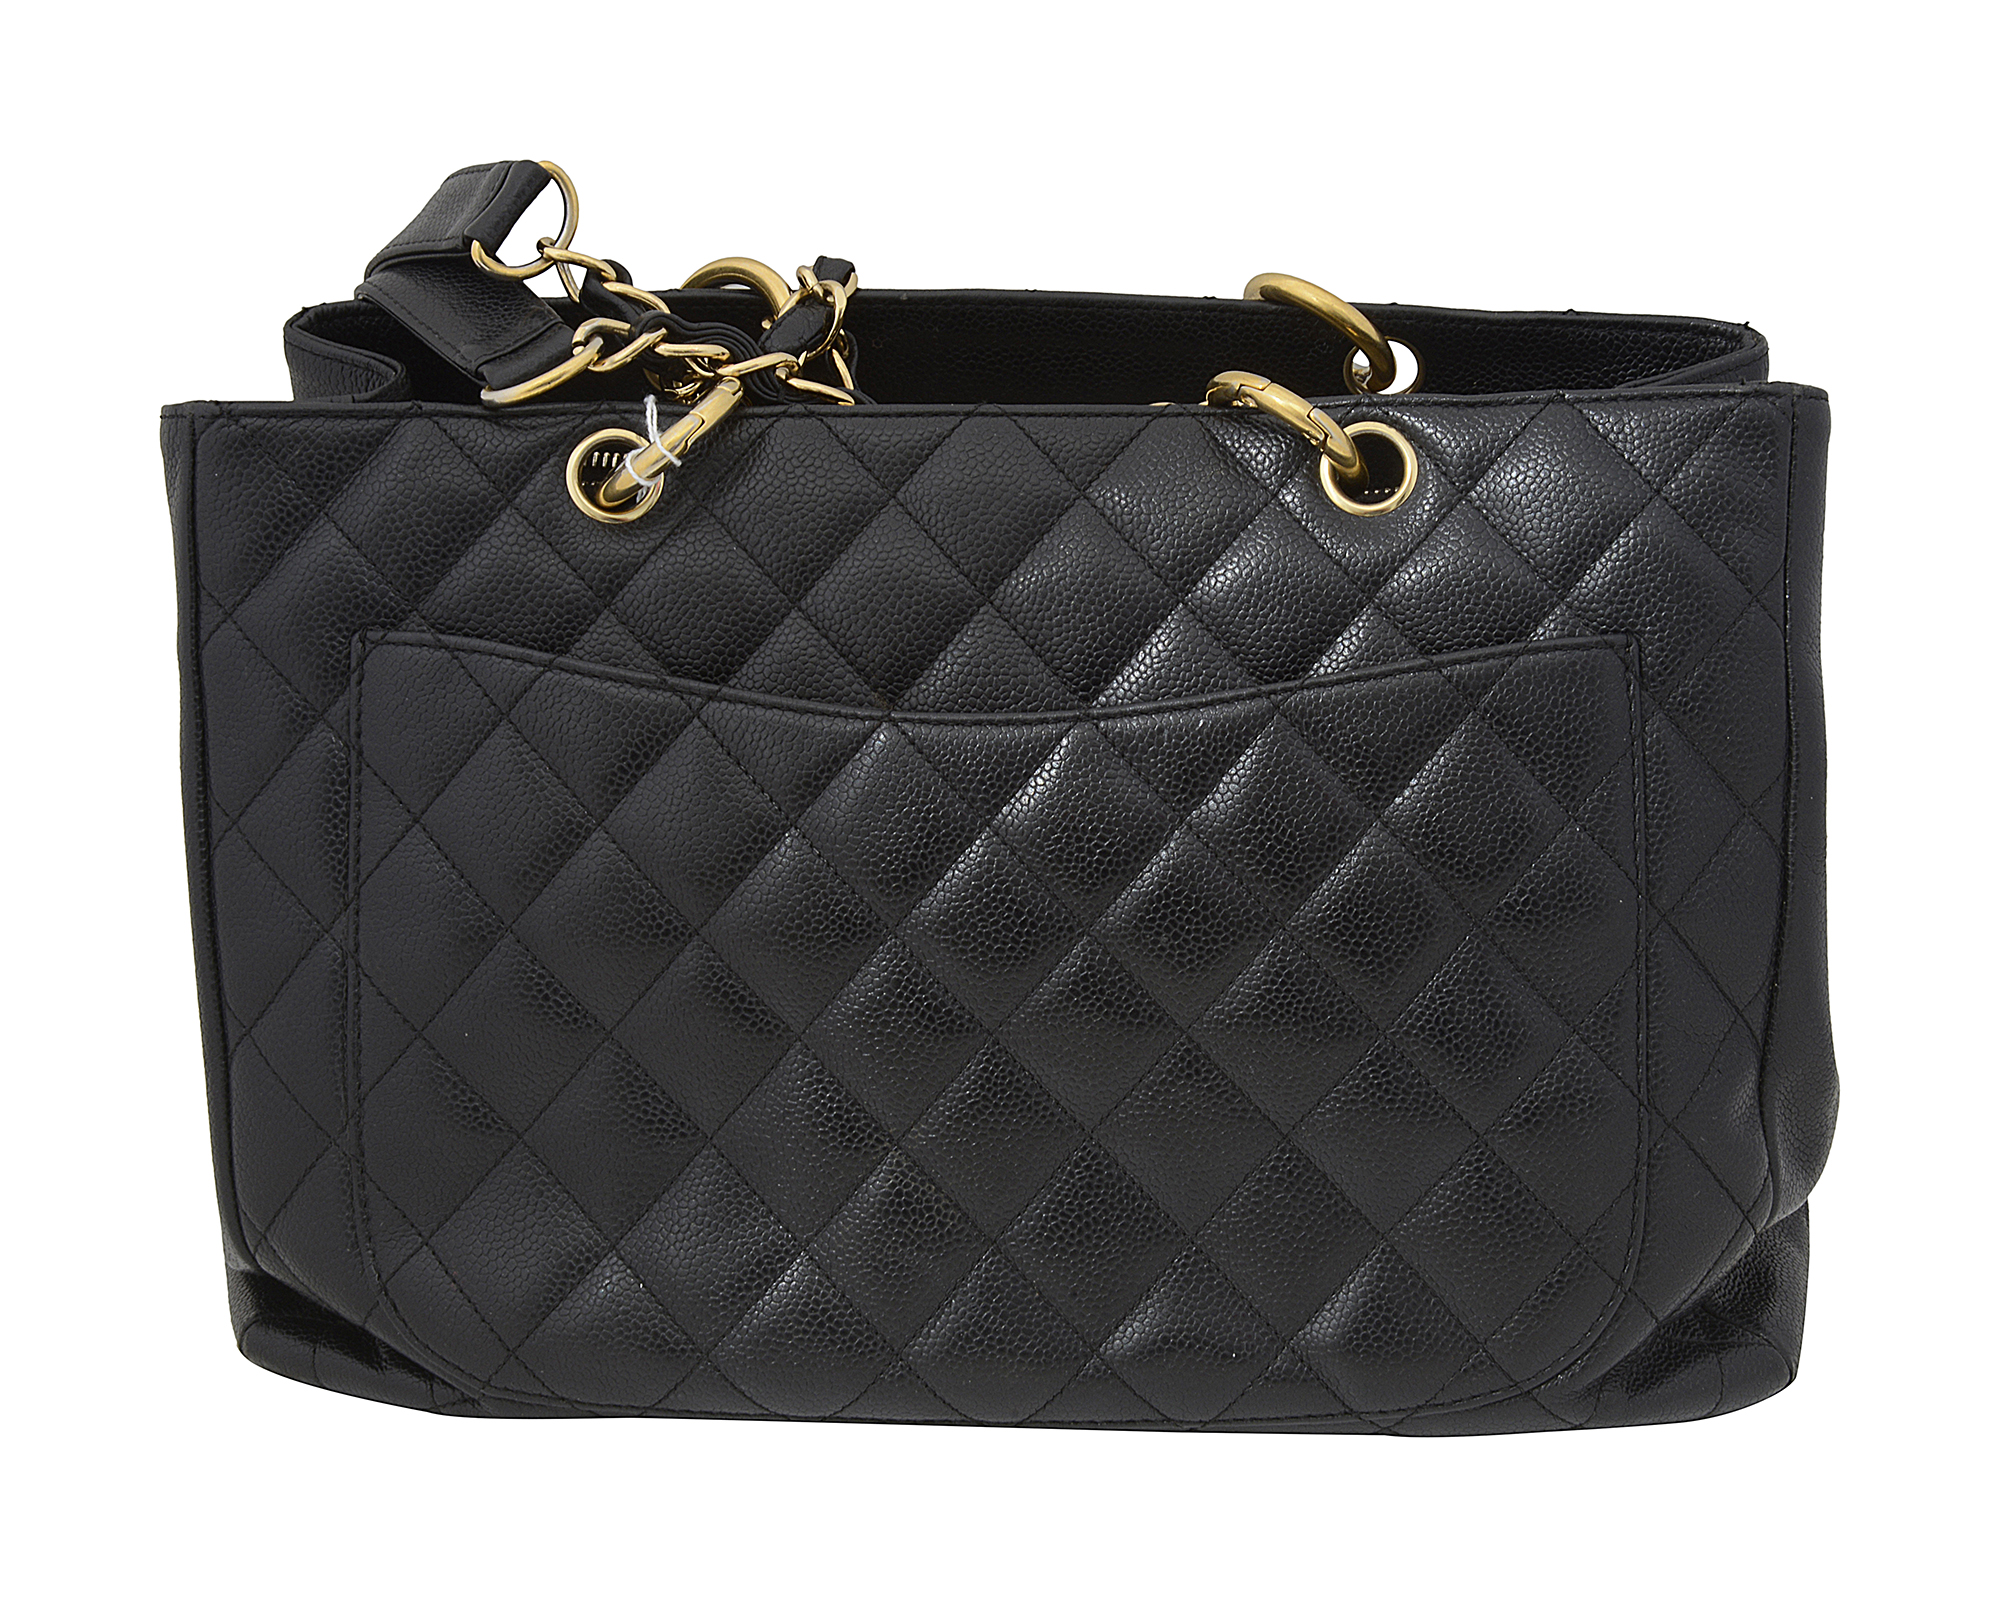 A Chanel black leather Grand handbag - Image 2 of 3